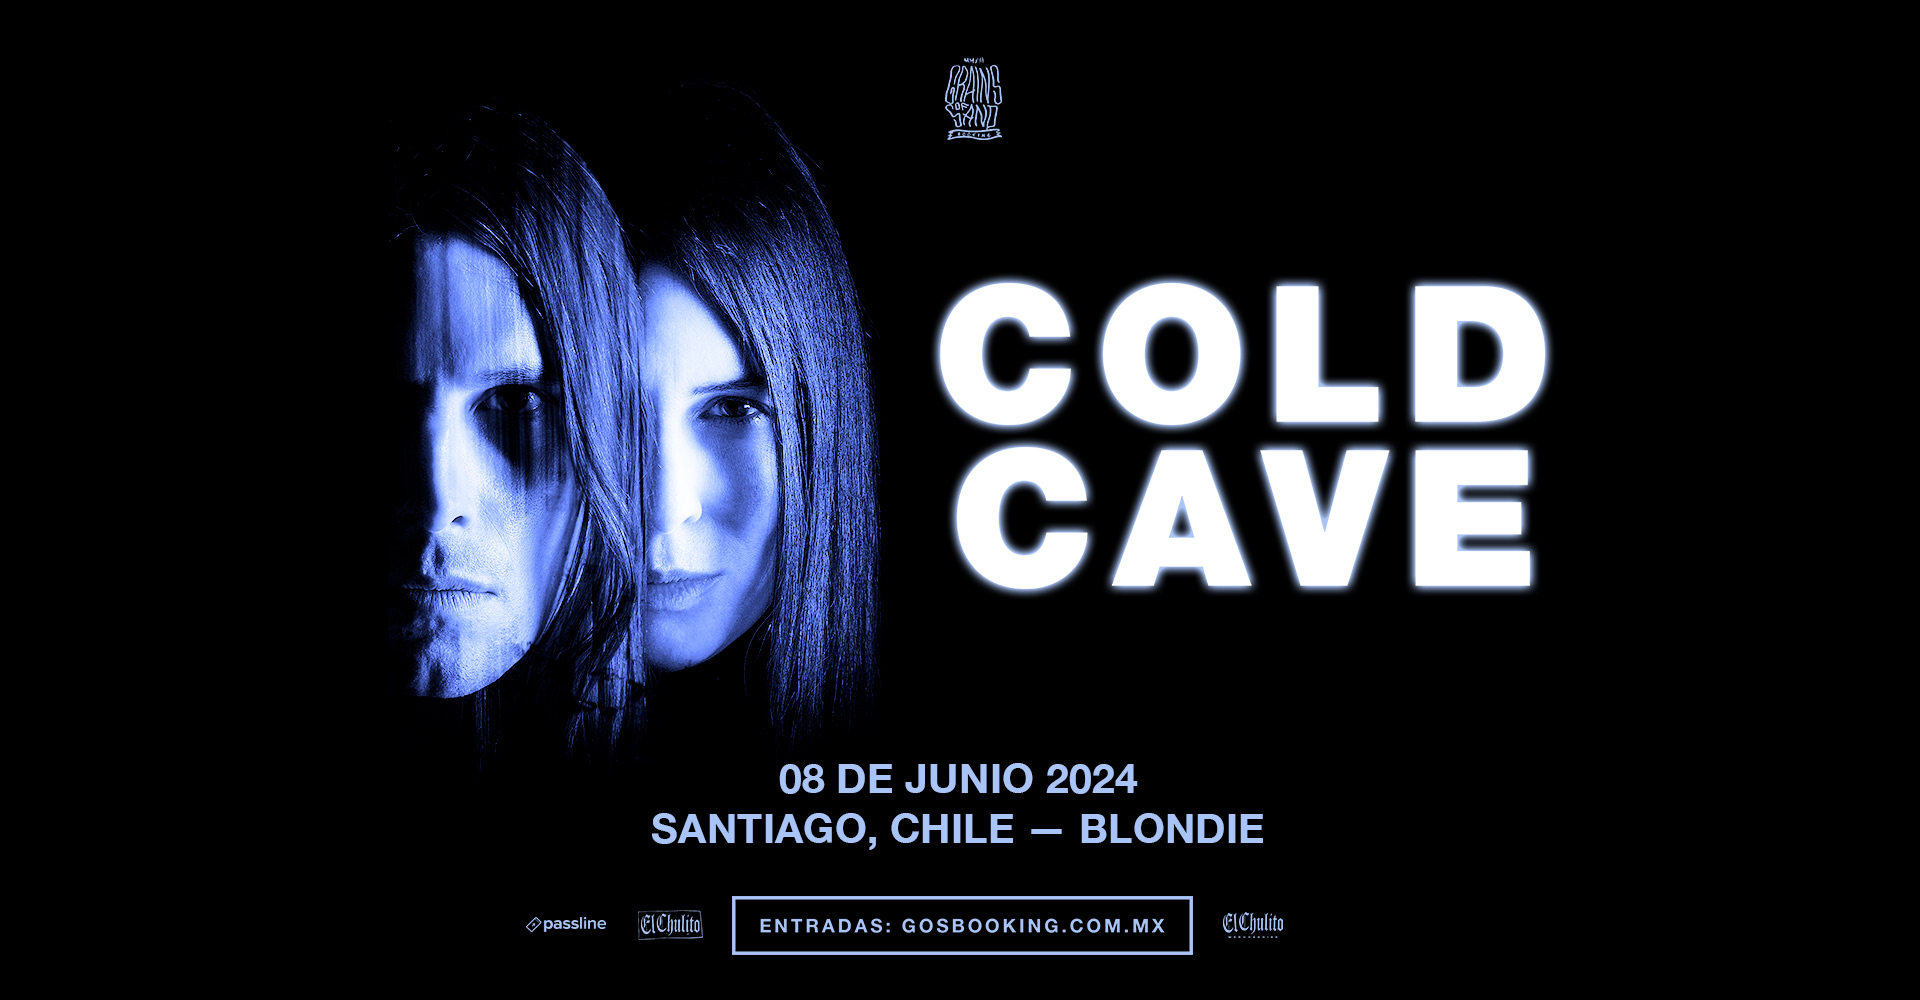 Cold Cave / Santiago de Chile, 08 de junio 2024